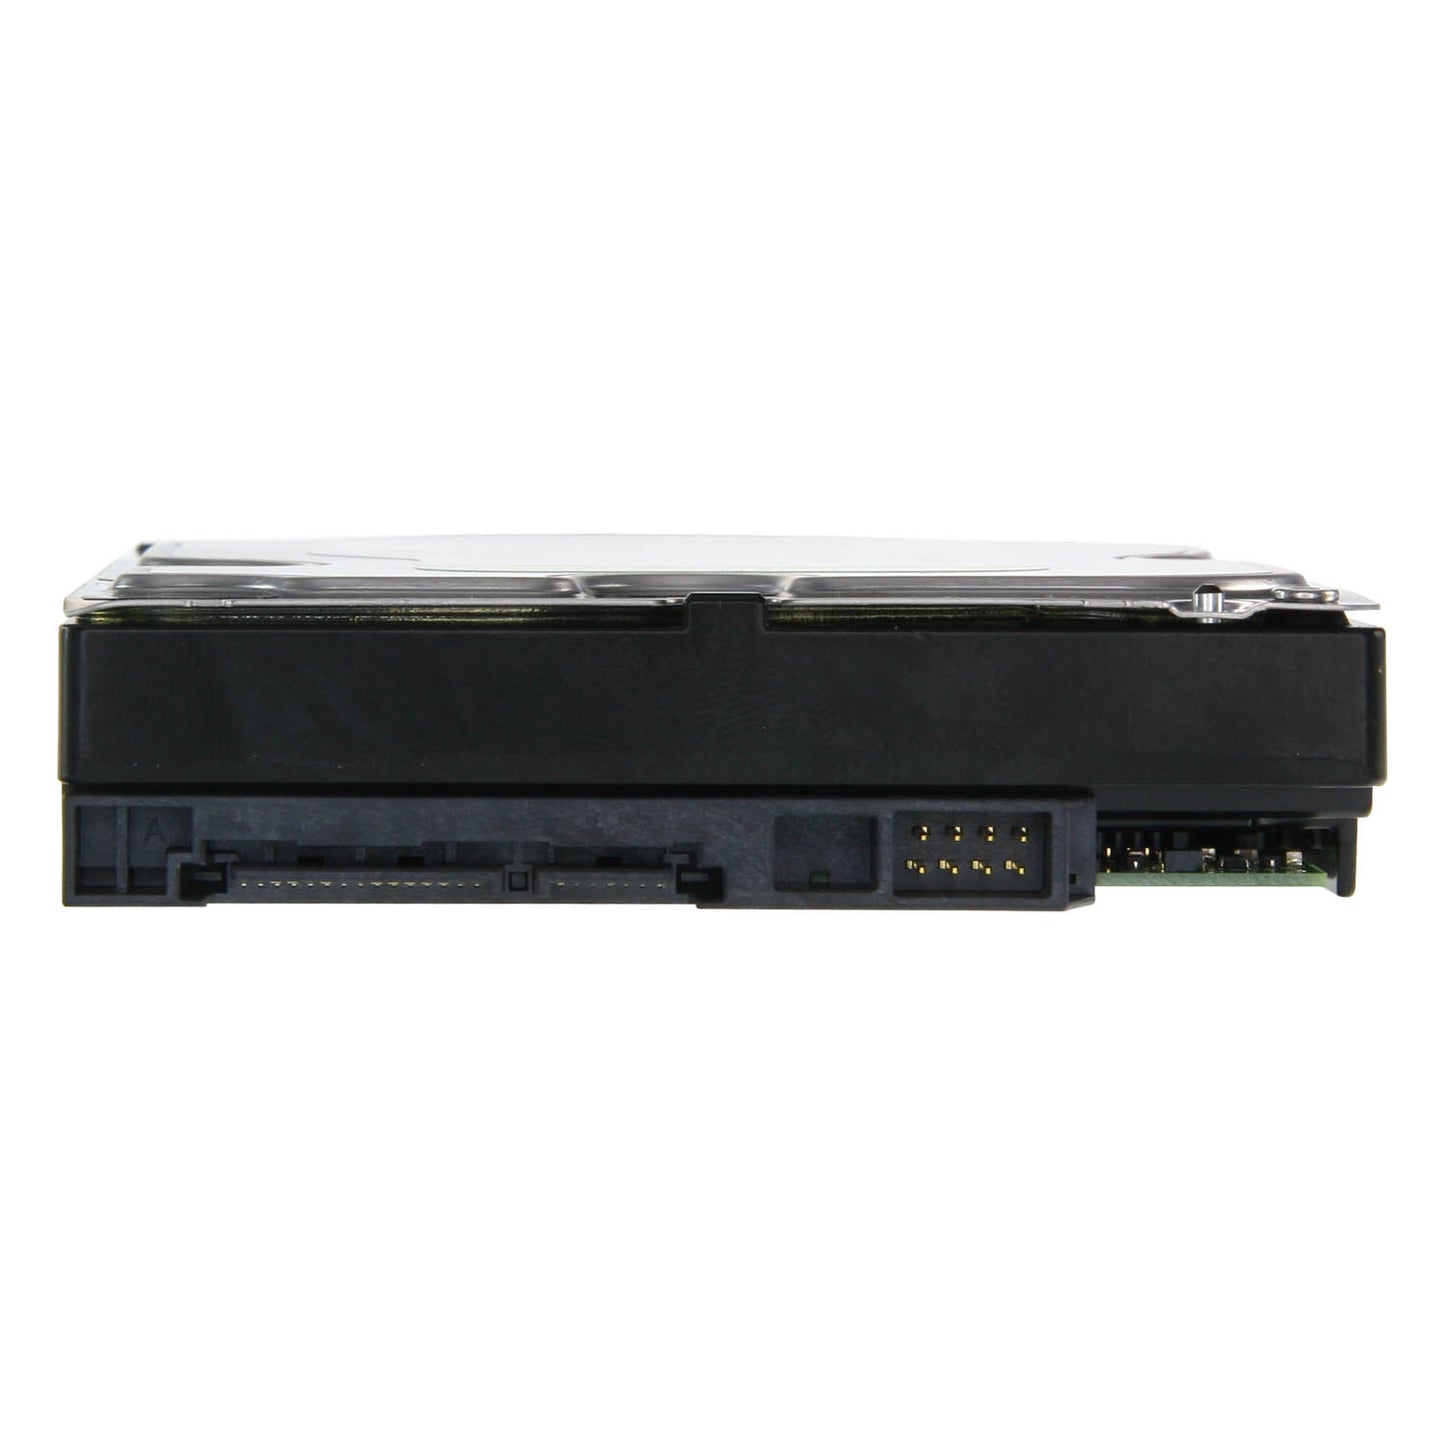 Disco Duro - Capacidad 2 TB - Interfaz SATA 6 GB/s - Modelo WD20PURX - Especial para videograbadores - Solo o instalado en DVR